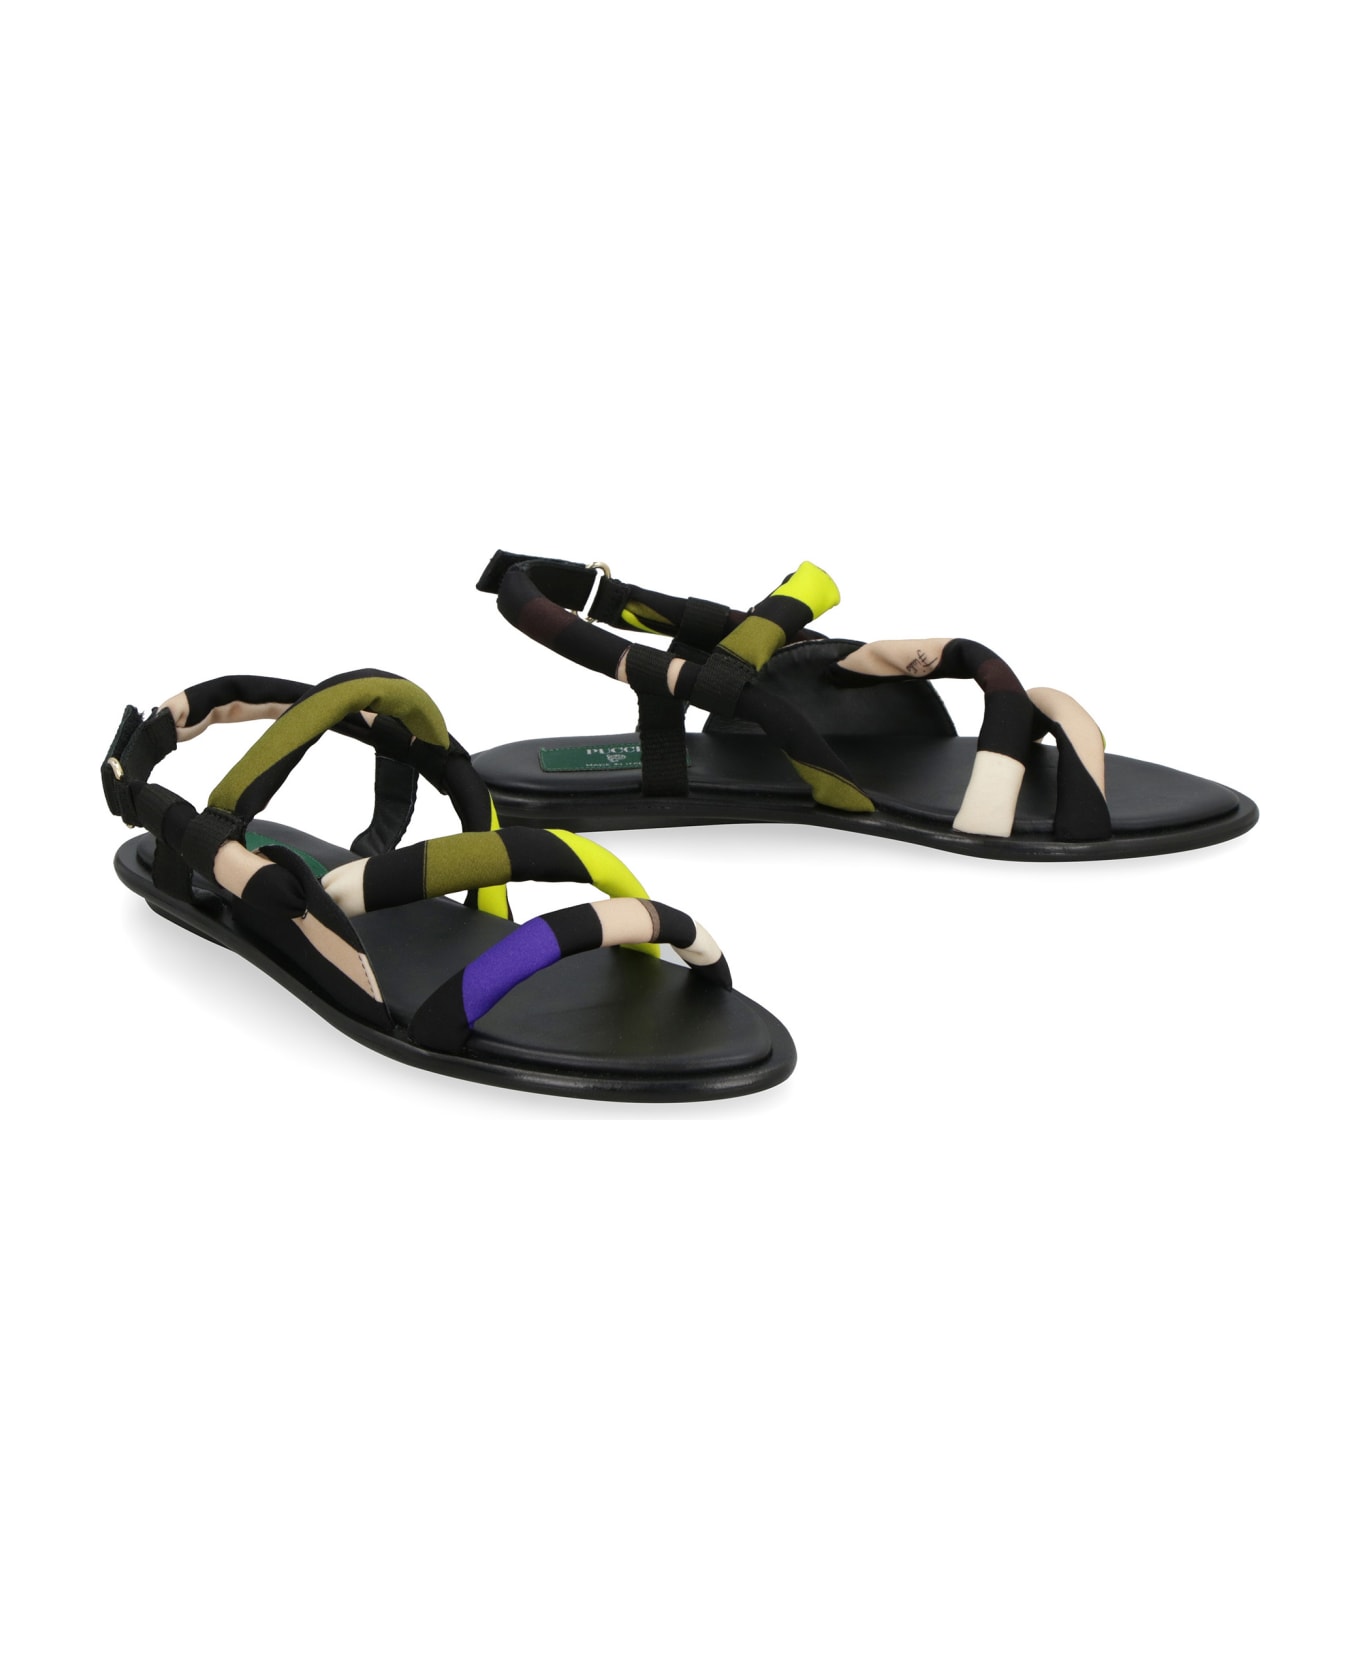 Pucci Lee Flat Sandals - Multicolor